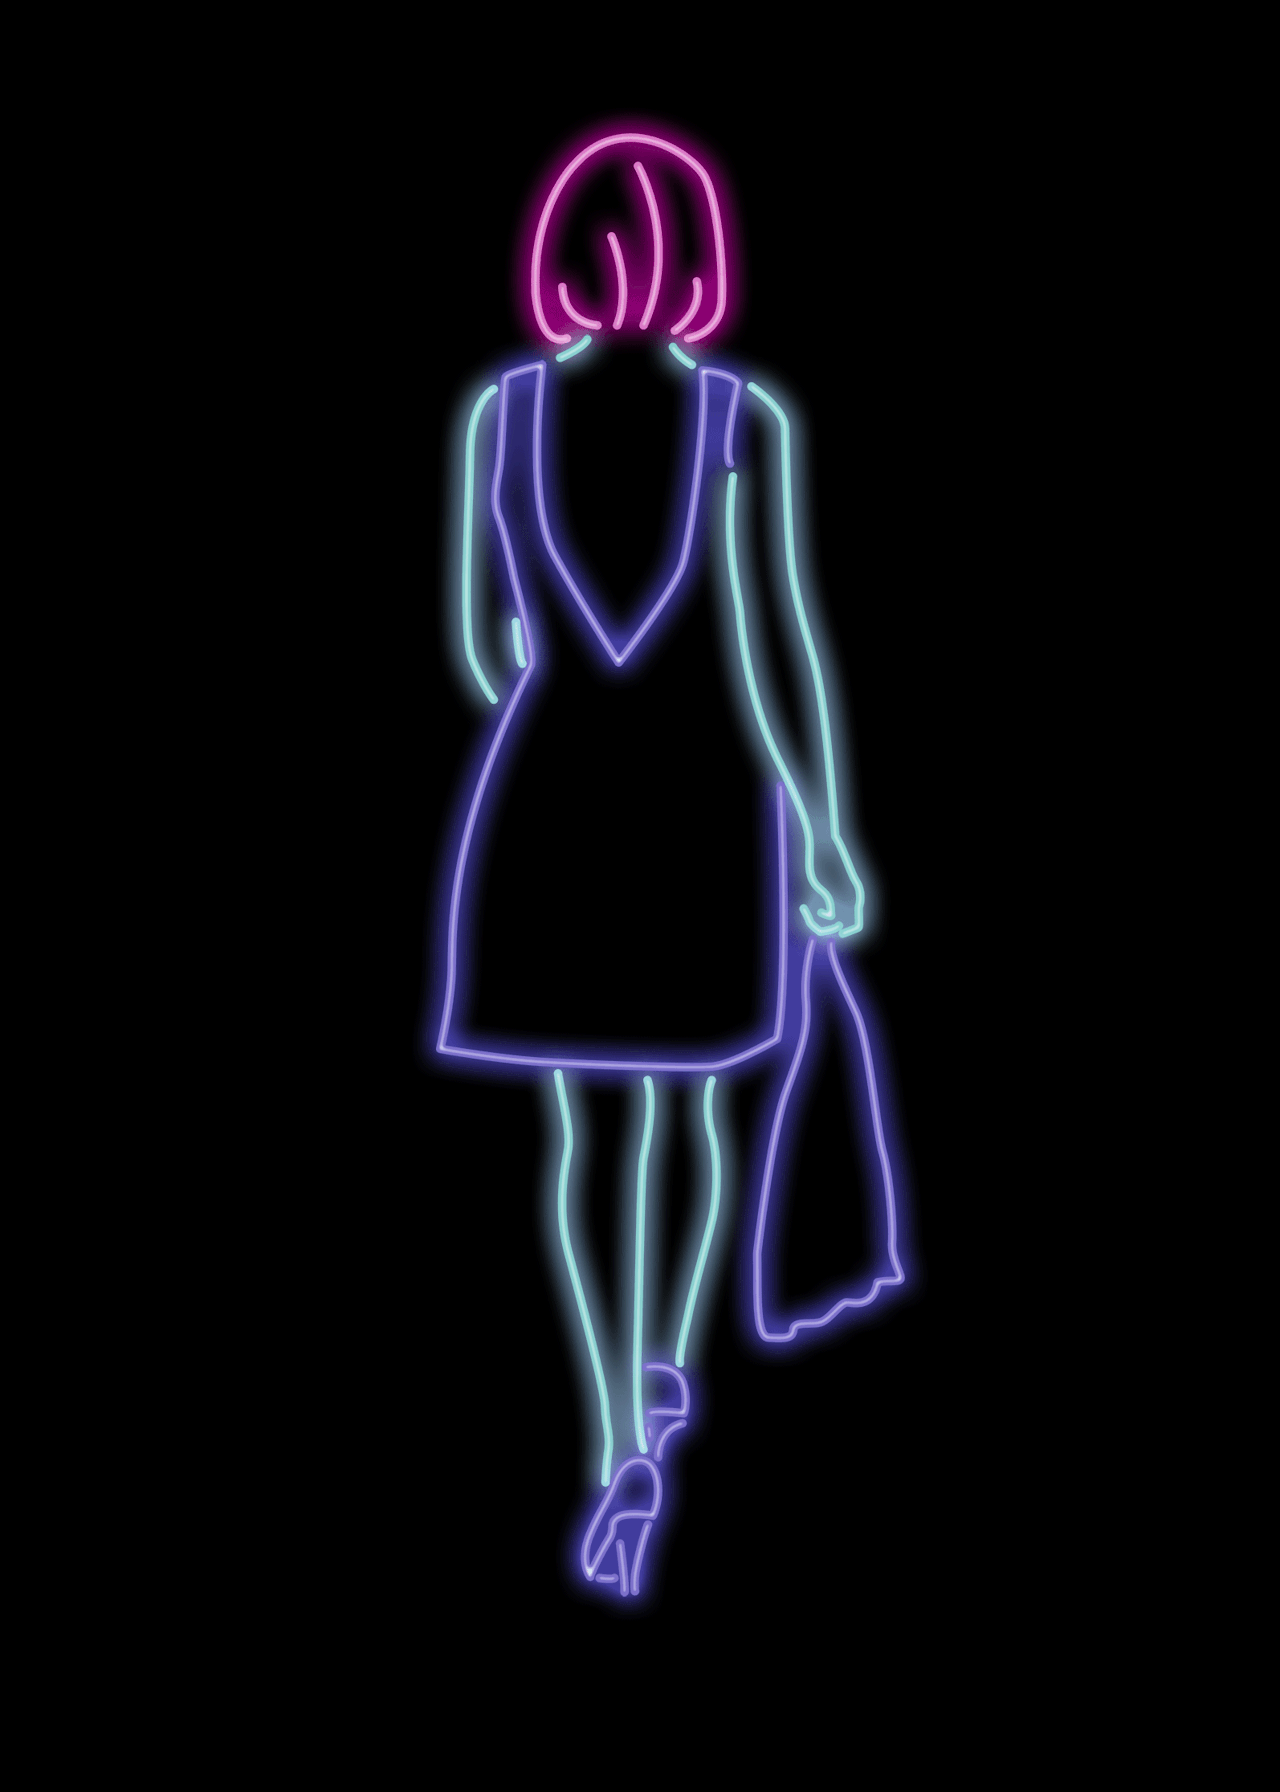 neon,artists on tumblr,okay bye,walk away,high heels,woman,neon lights,strut,pulp,neon colors,pulp art,glow,bye,heels,noir,pop art,ok bye,neon art,neon hair